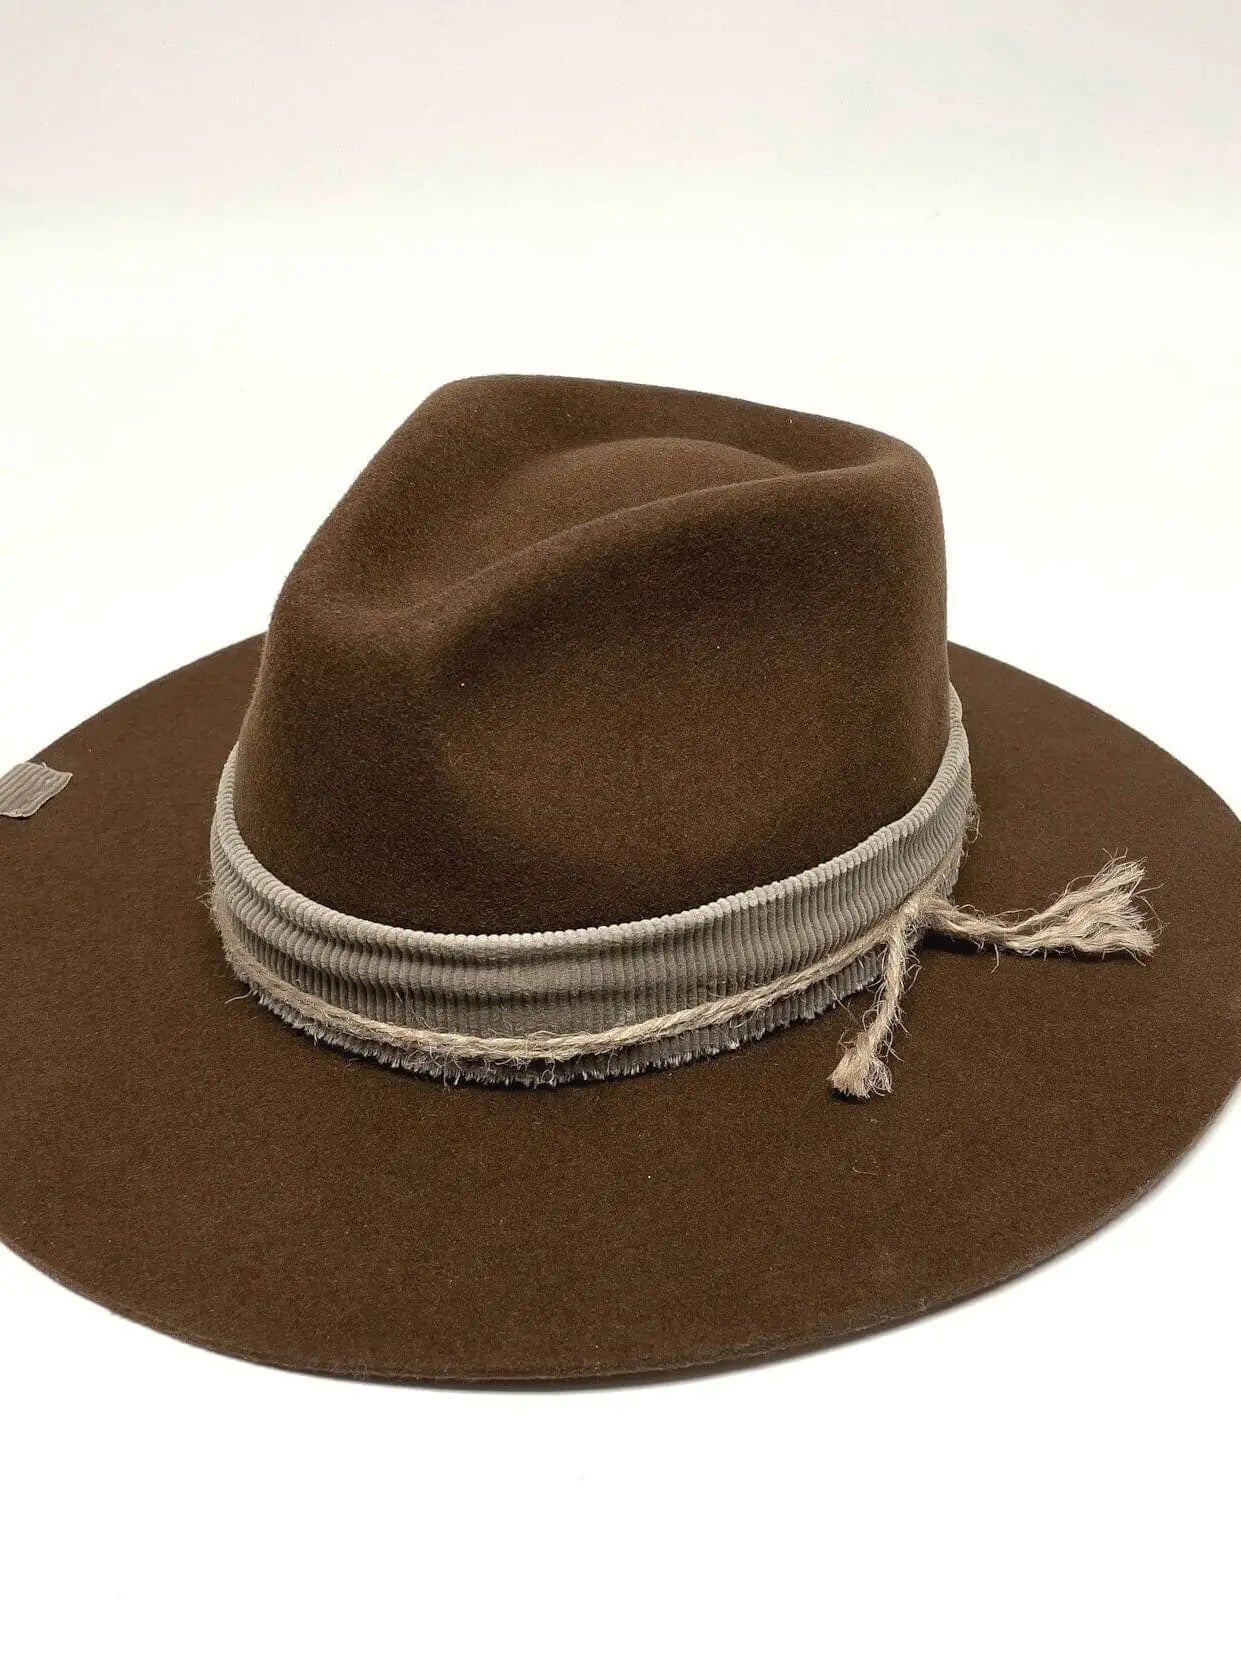 American Hat Maker - Wessex Felt Hat